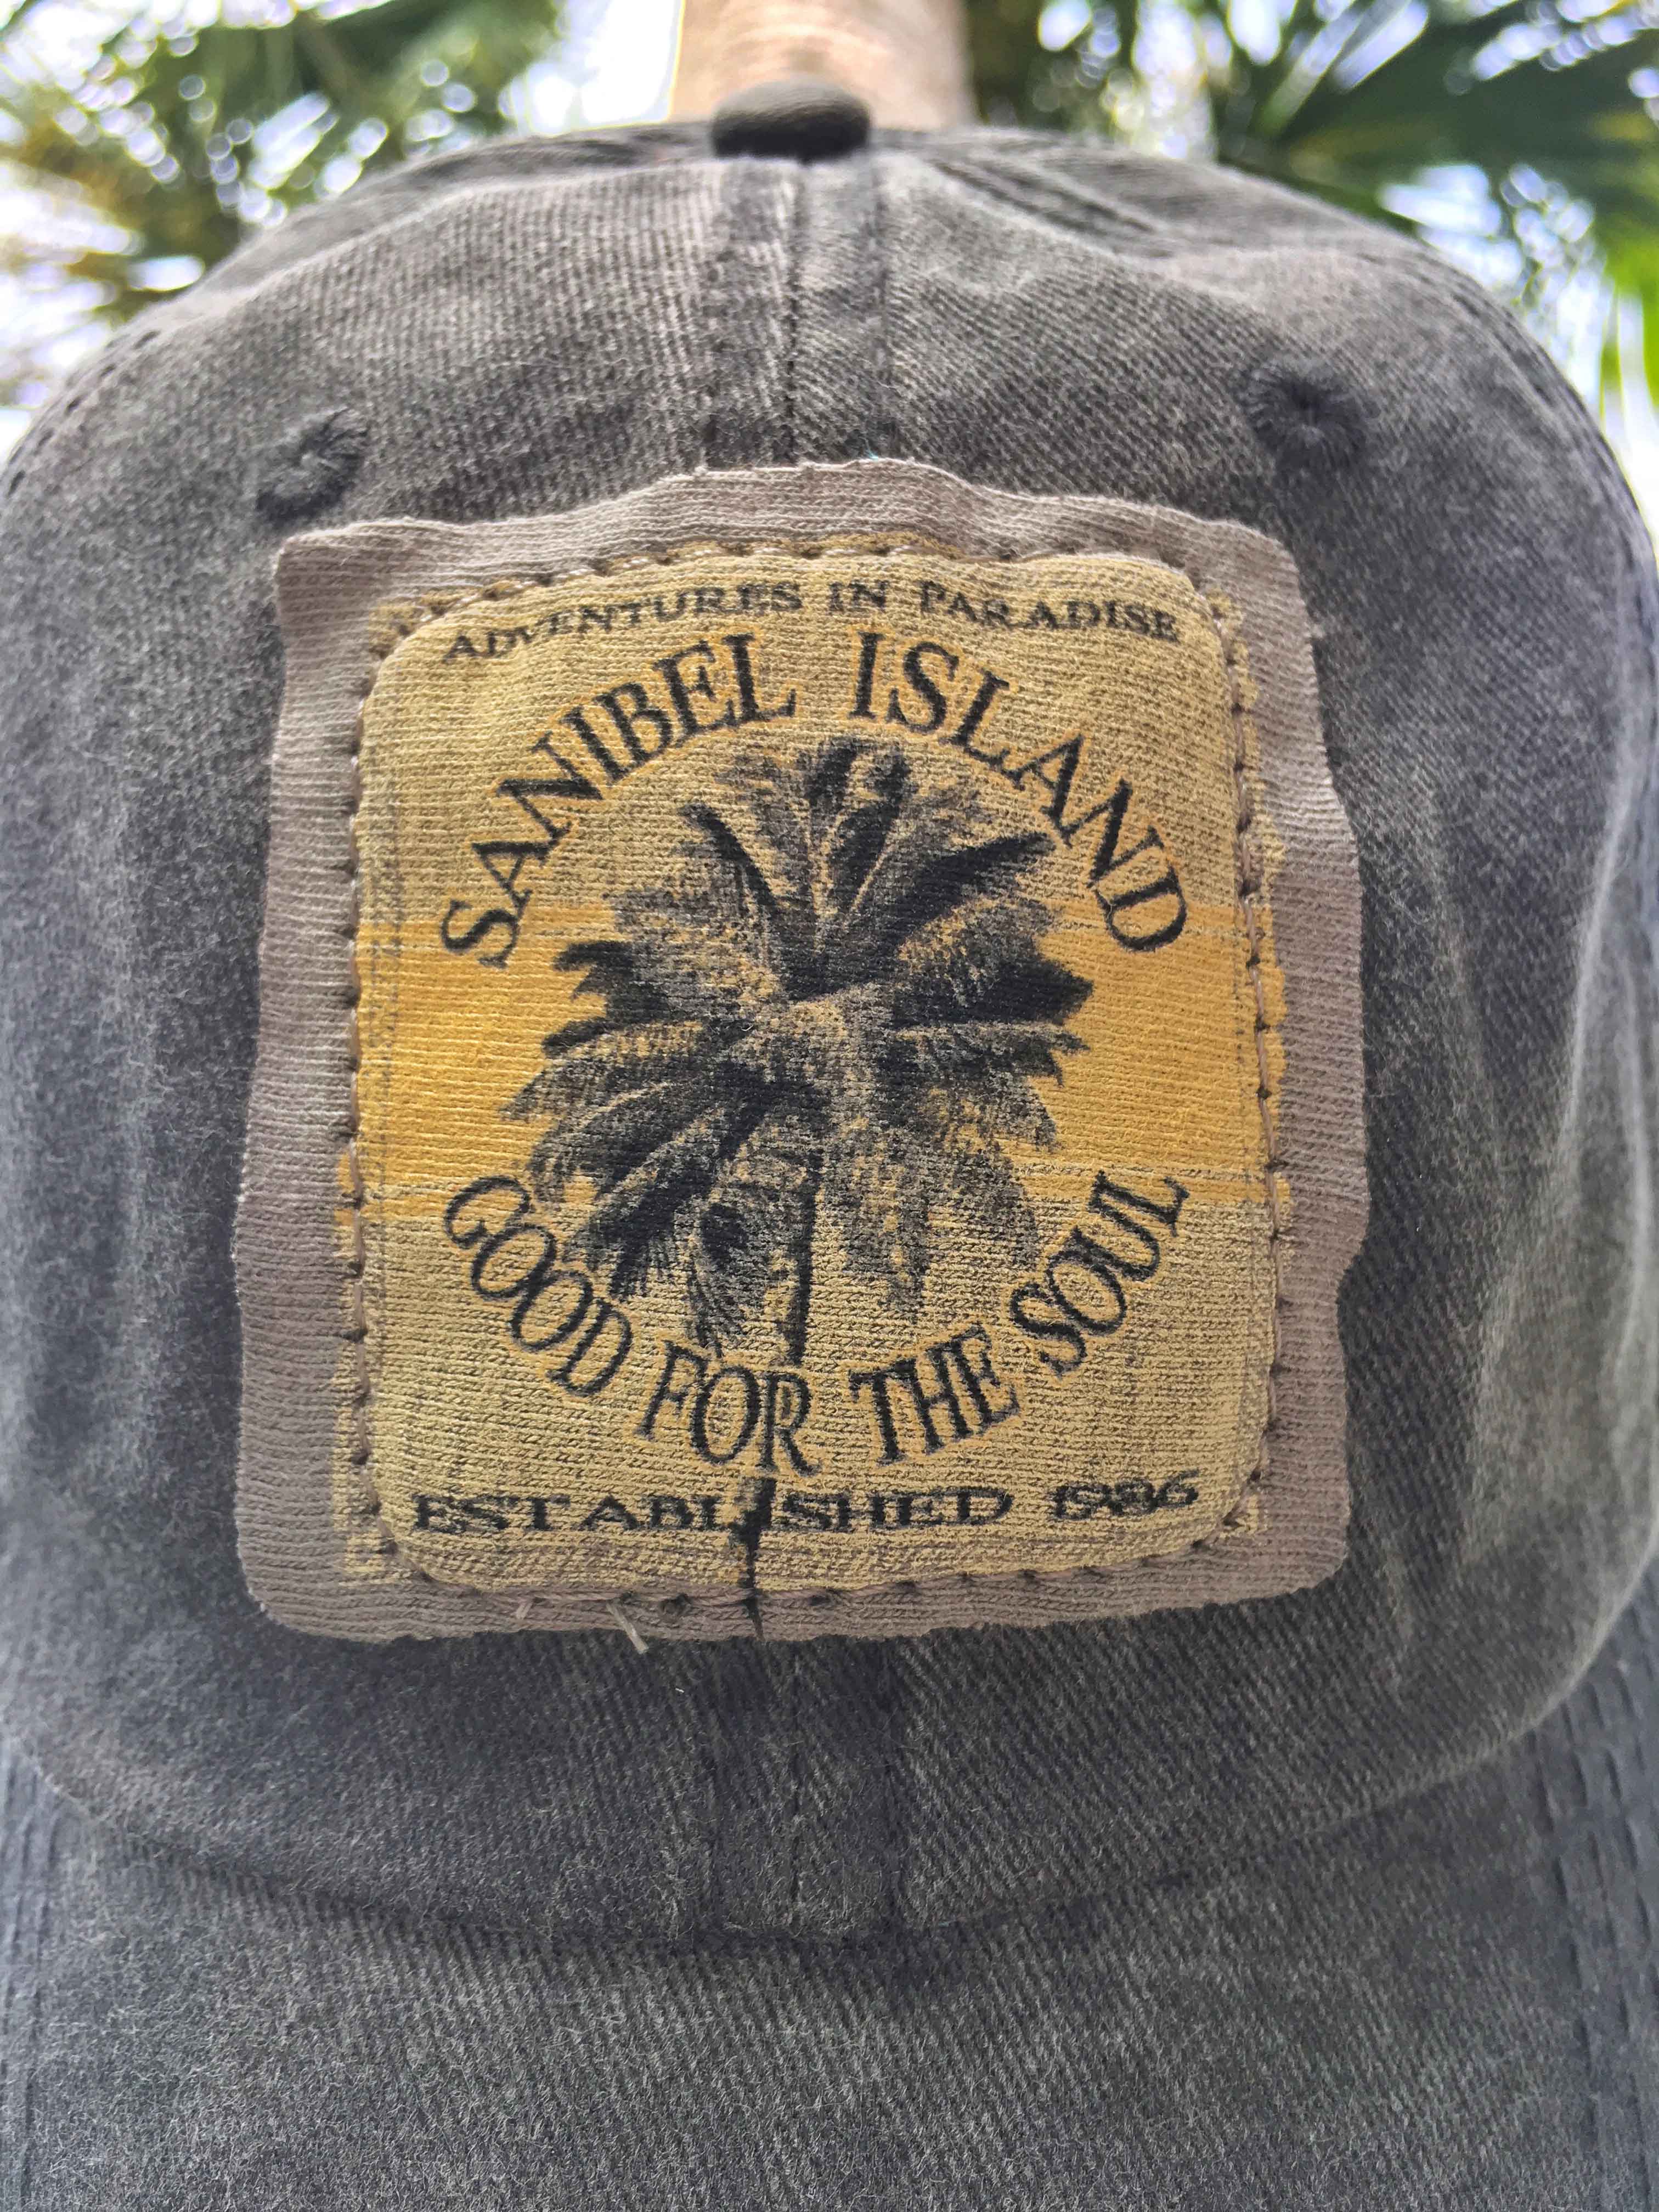 Island Hat Patch